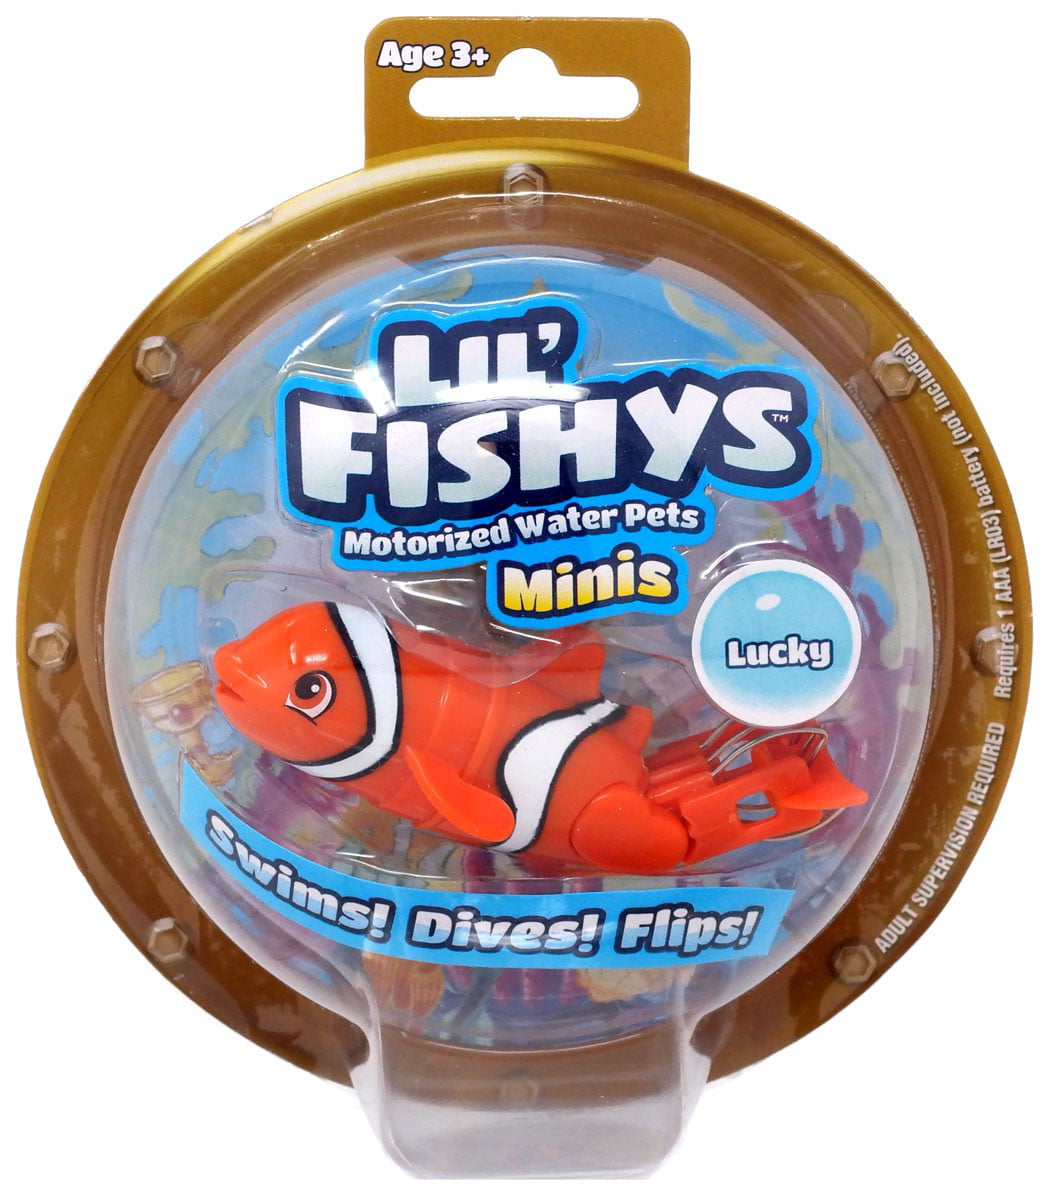 Lil' Fishys Croozer Motorized Water Pet